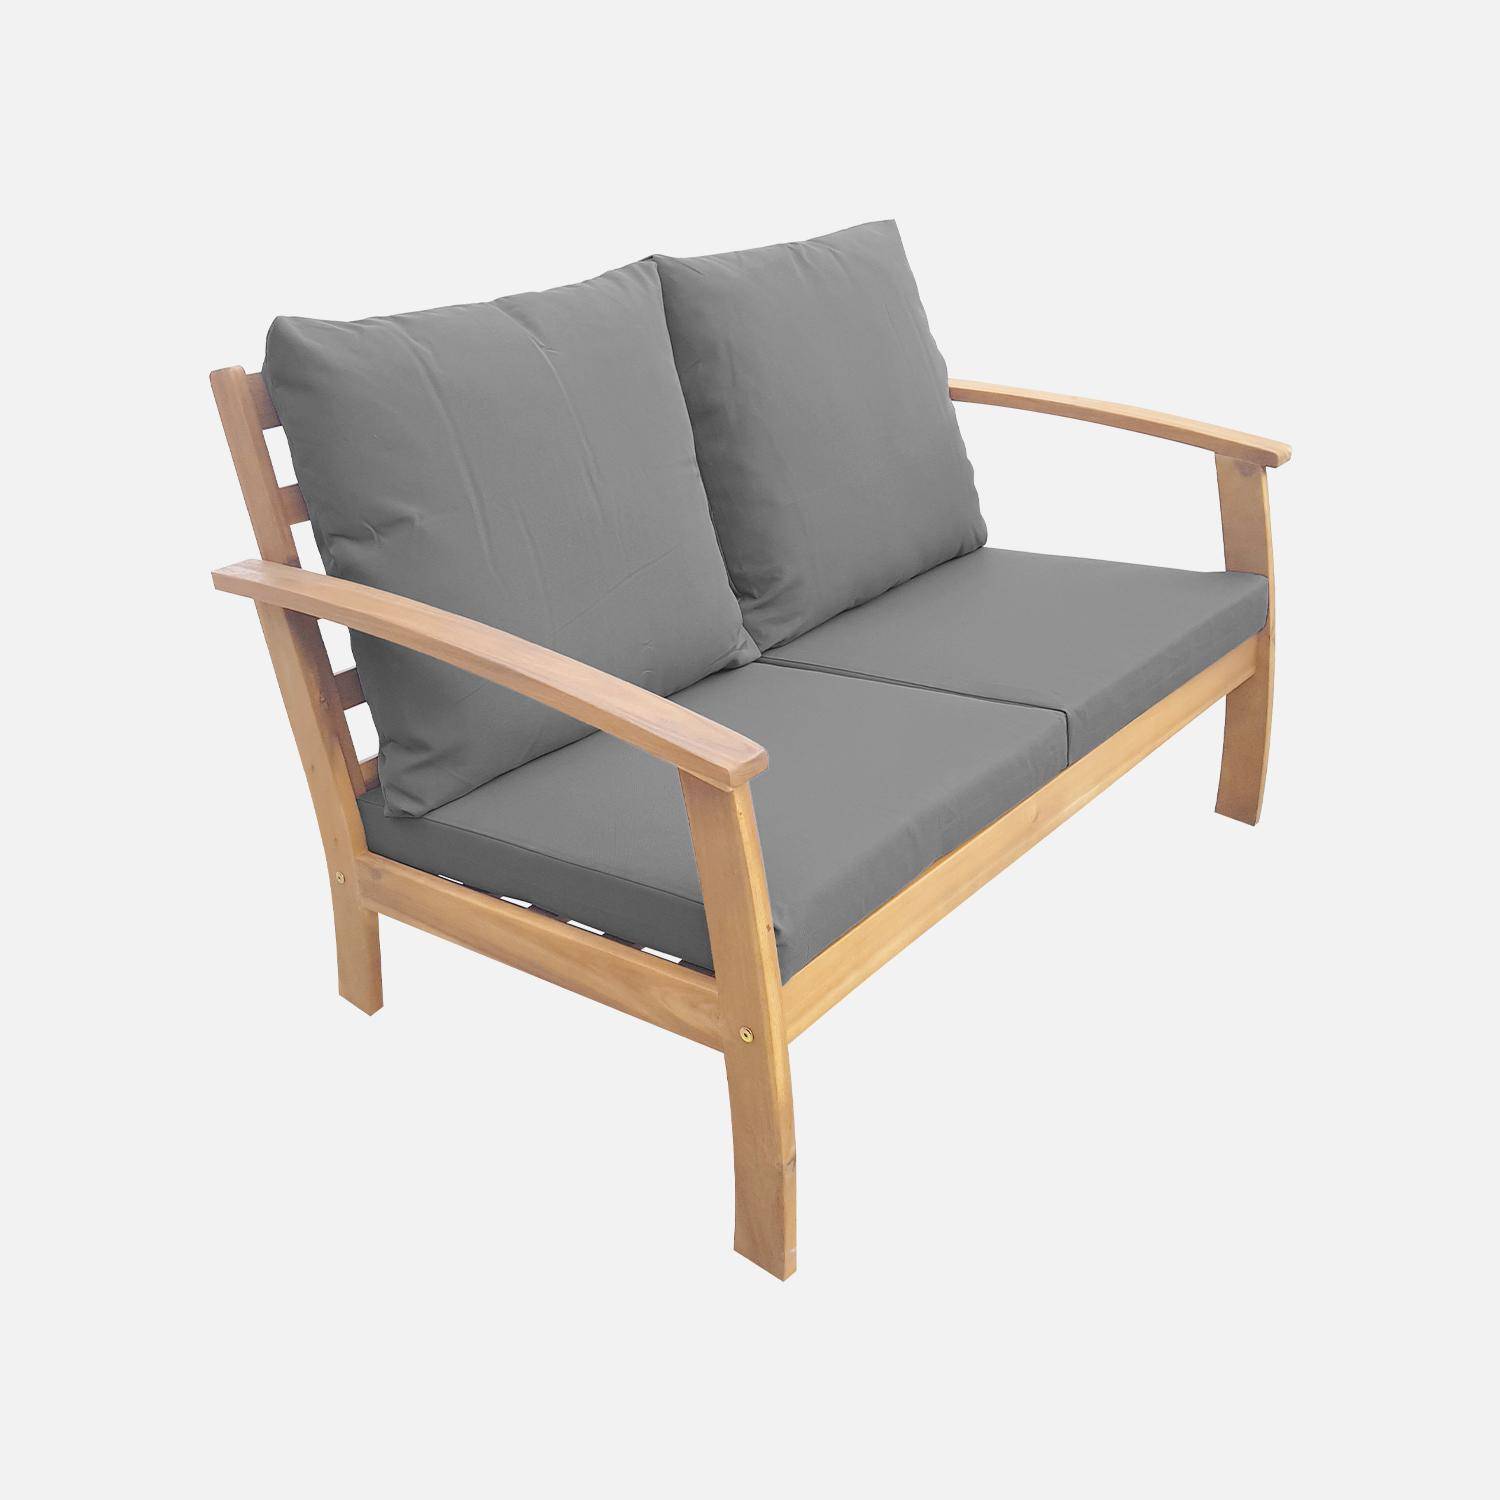 4-seater wooden garden sofa - Acacia wood sofa, armchairs and coffee table, designer piece  - Ushuaia - Grey,sweeek,Photo3